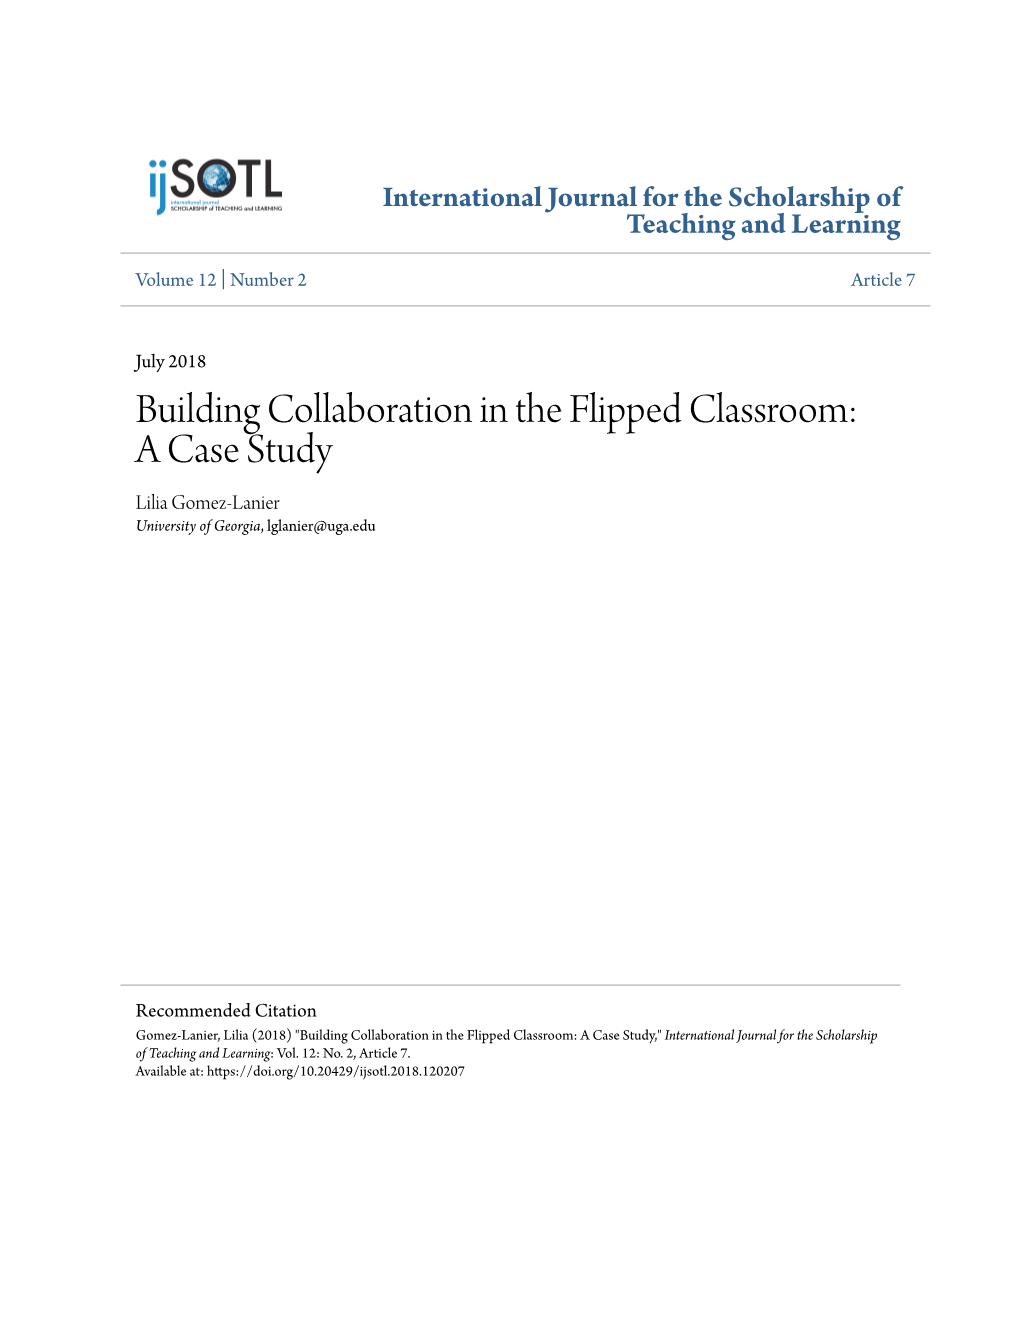 Building Collaboration in the Flipped Classroom: a Case Study Lilia Gomez-Lanier University of Georgia, Lglanier@Uga.Edu